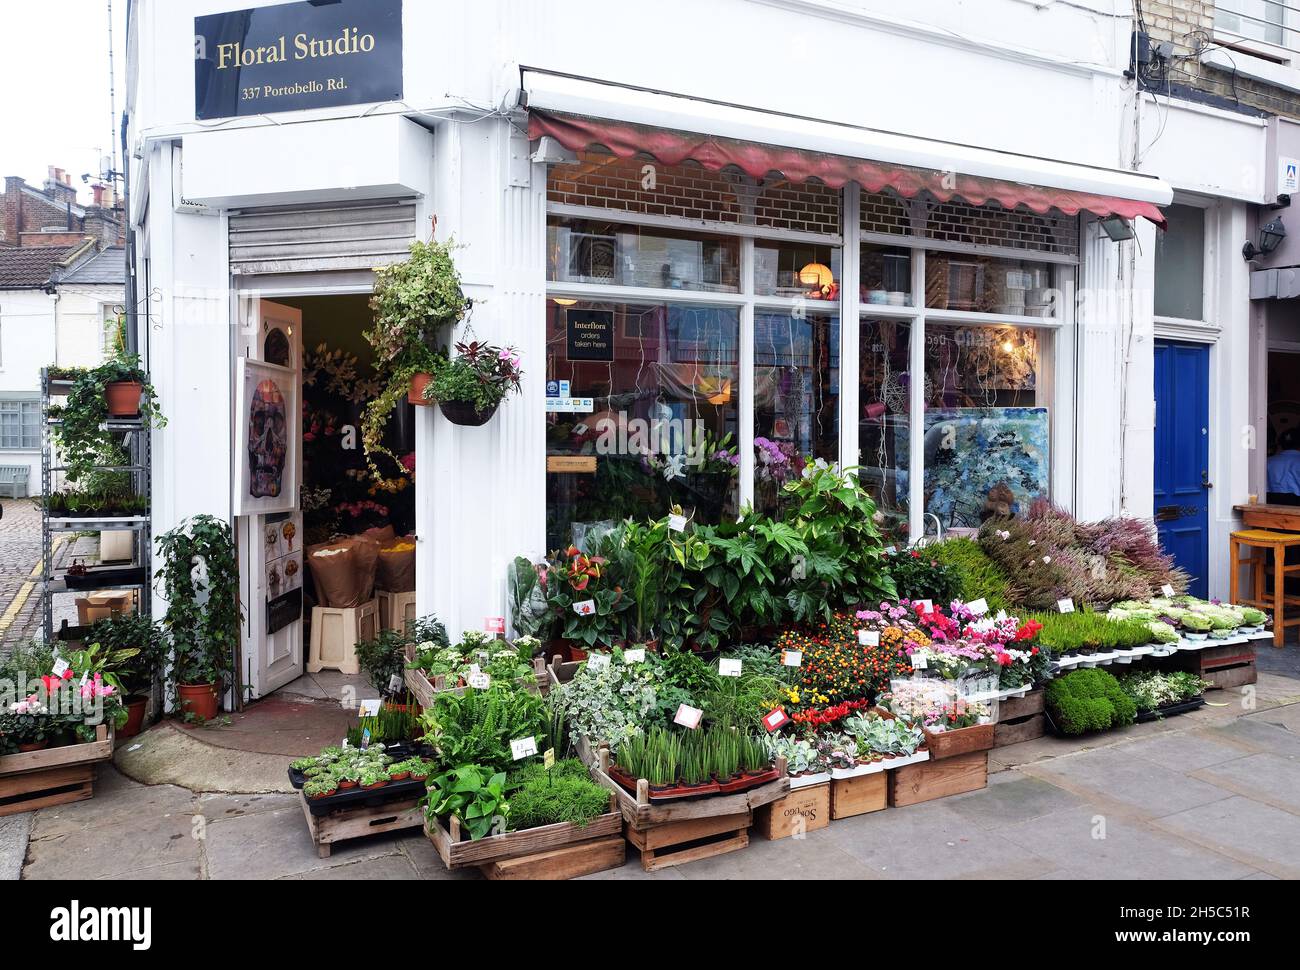 facade of Floral Studio, Portobello road, London, Uk Stock Photo